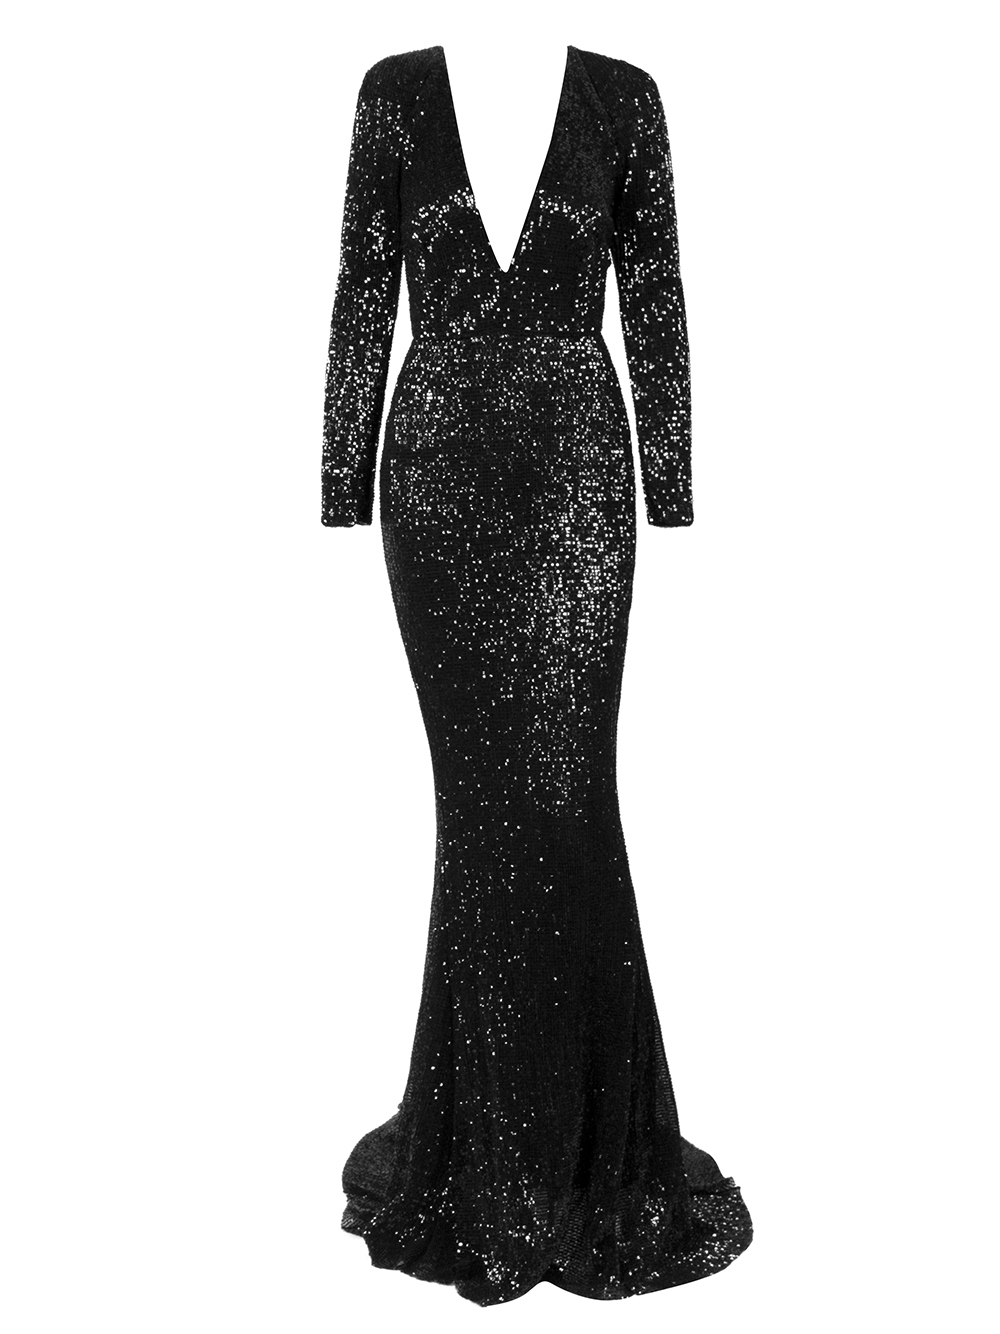 LB1901 BLACK - Luxette Boutique Long Sleeve Sequin Mermaid Gown